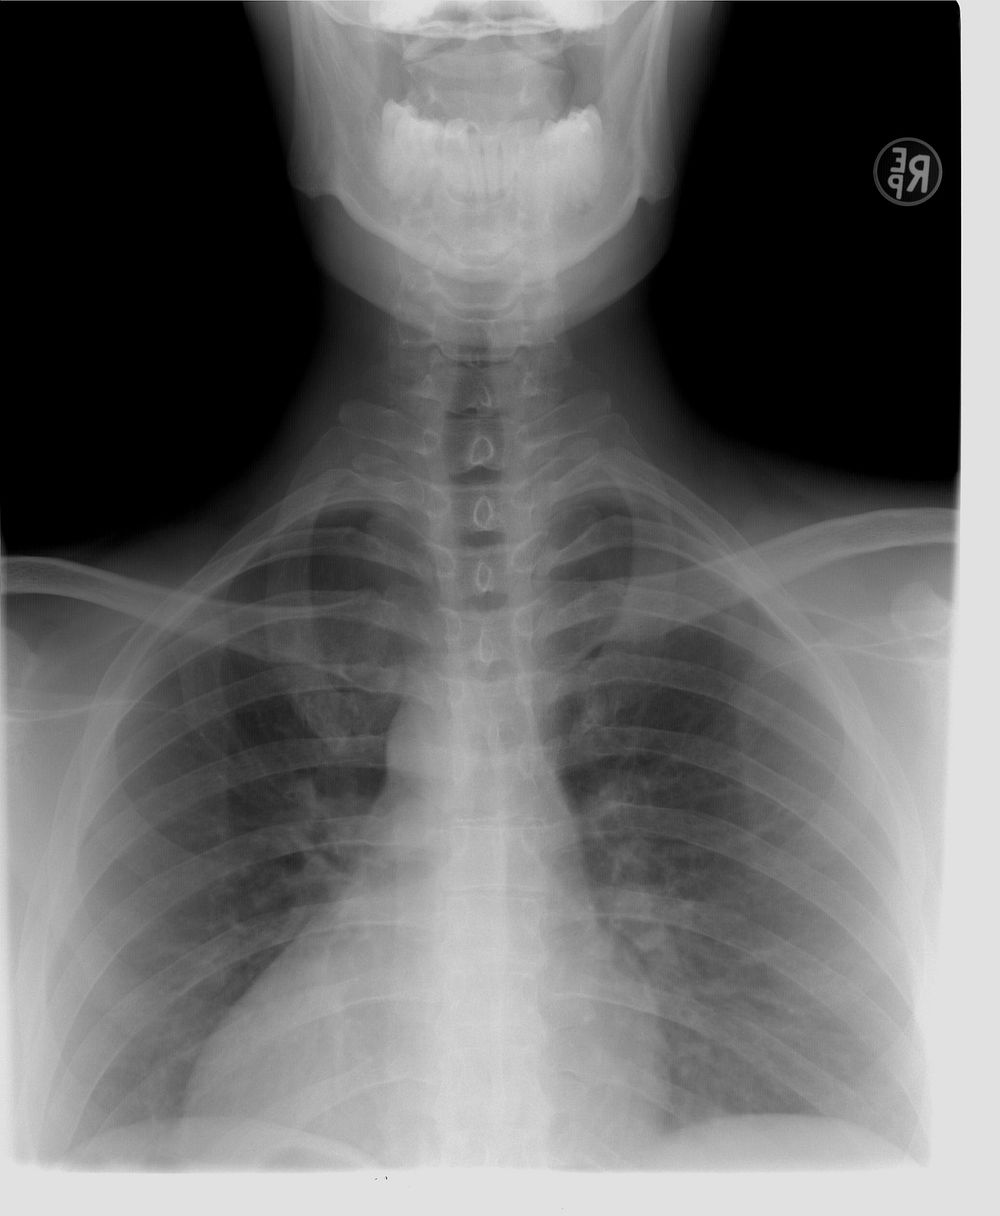 Free CT cardiac chest scan image, public domain CC0 photo.